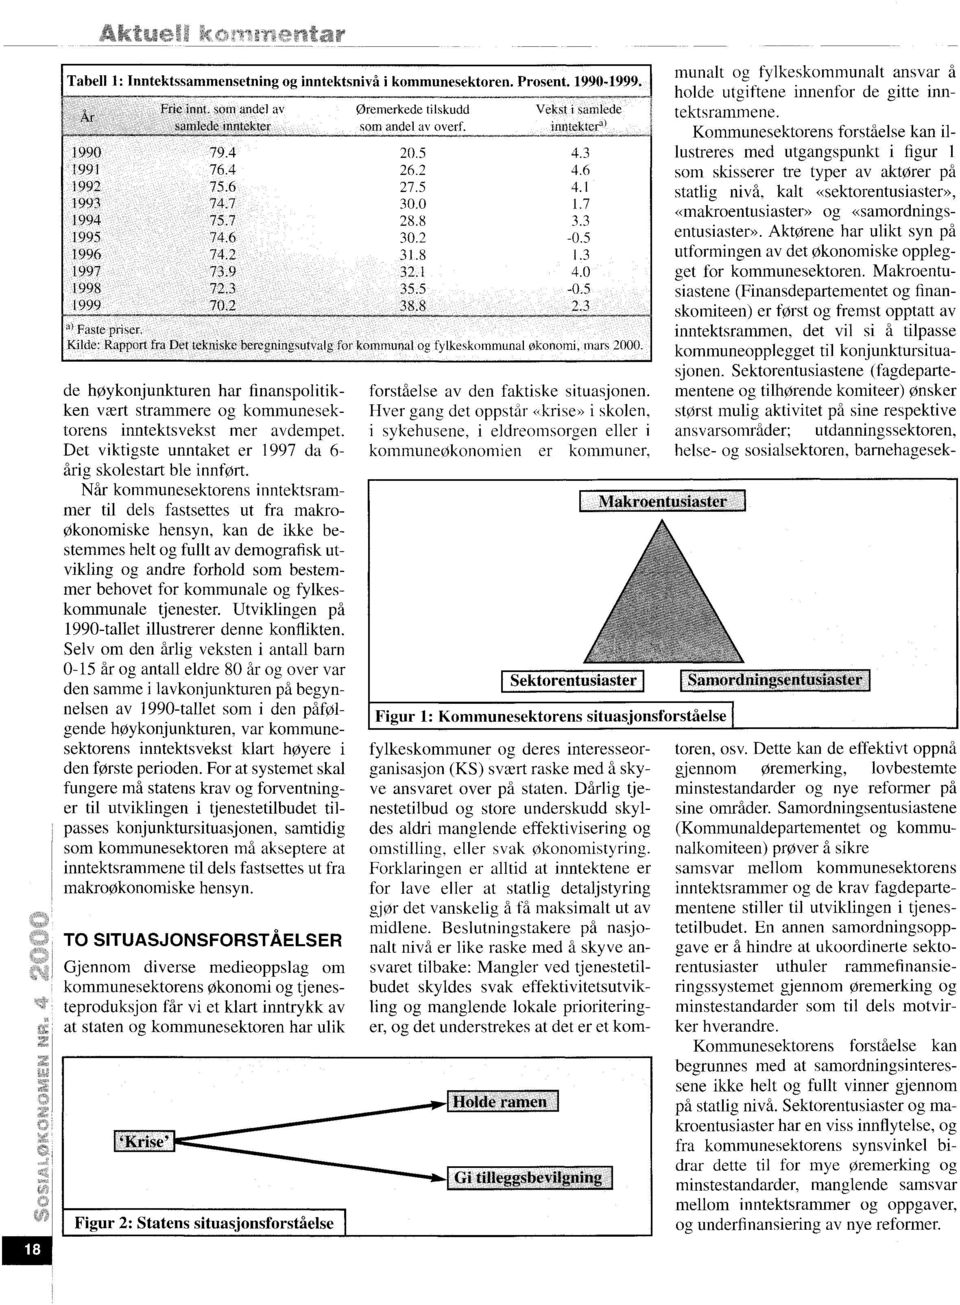 3 a) Faste priser. Kilde: Rapport fra Det tekniske beregningsutvalg for kommunal og fylkeskommunal økonomi, mars 2000.